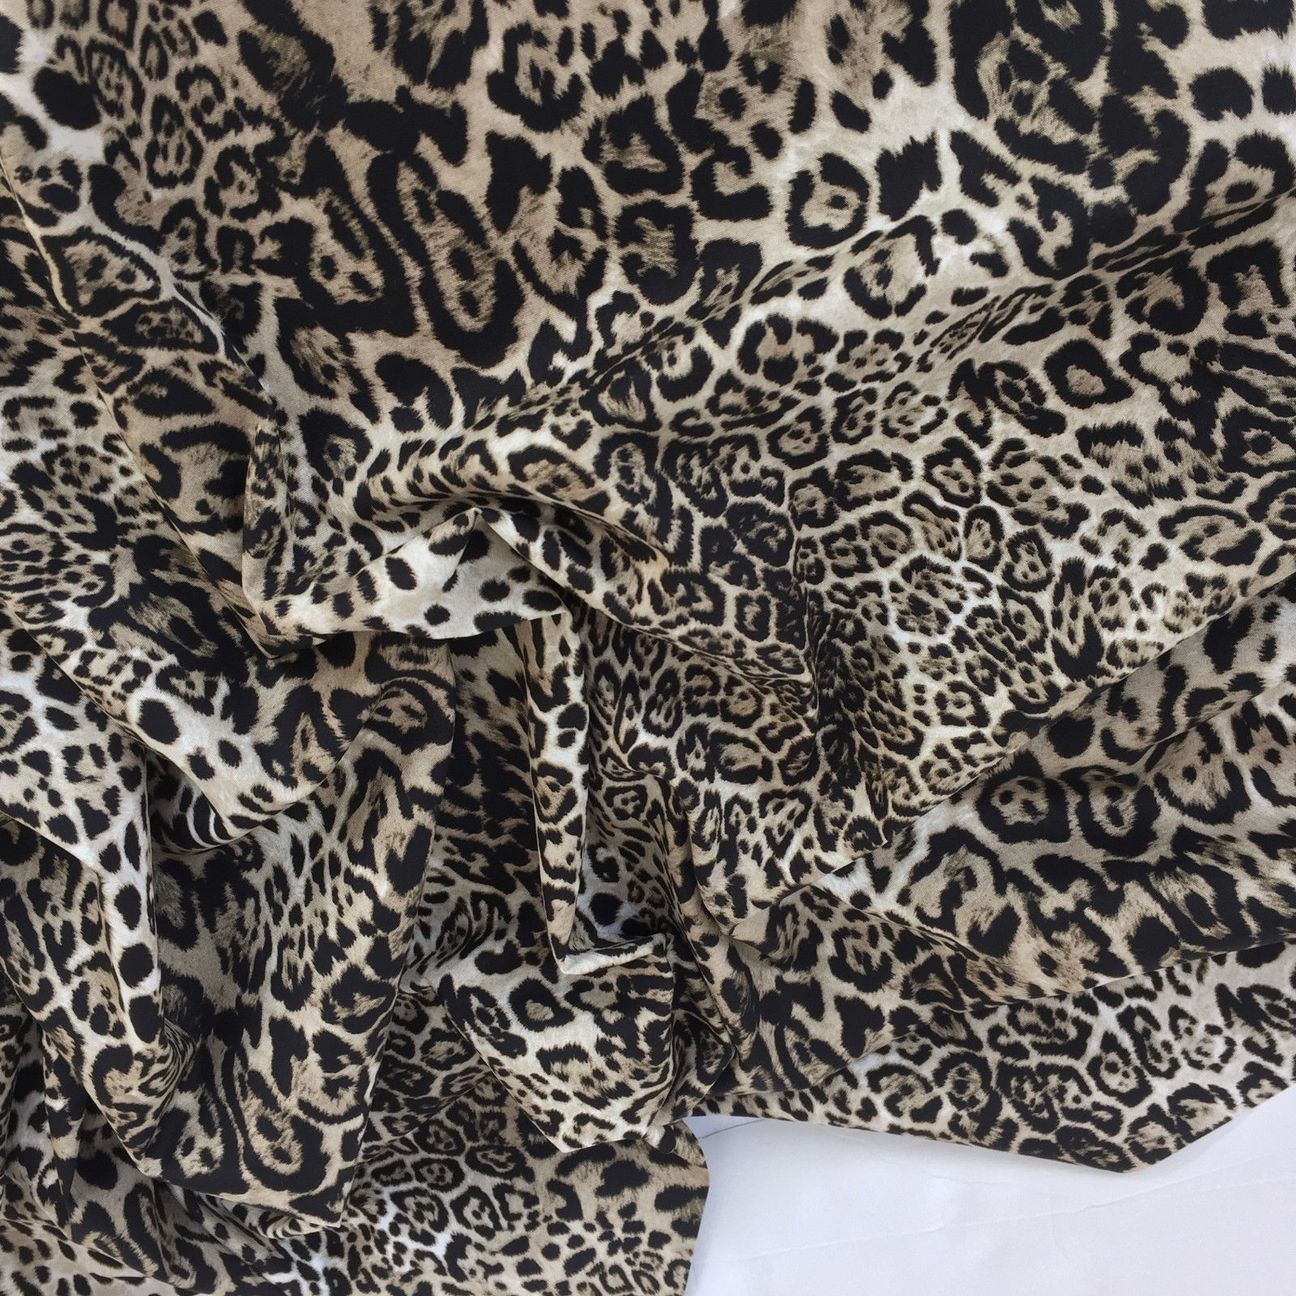 Rose & Hubble Lynx animal Print Cotton Fabric for craft & dressmaking